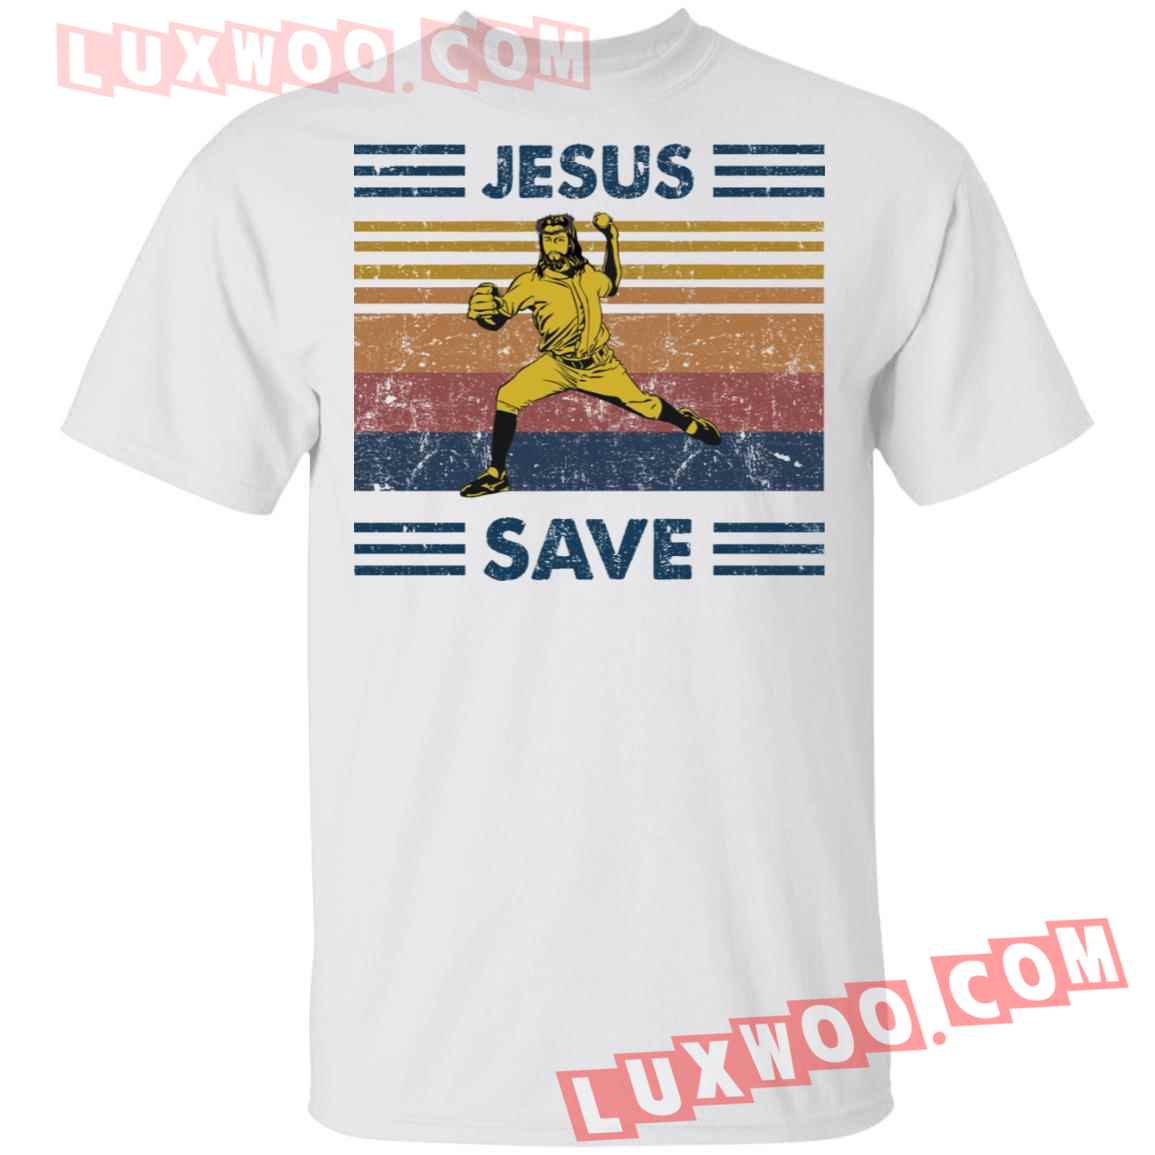 Jesus Saves Baseball Shirt - Luxwoo.com